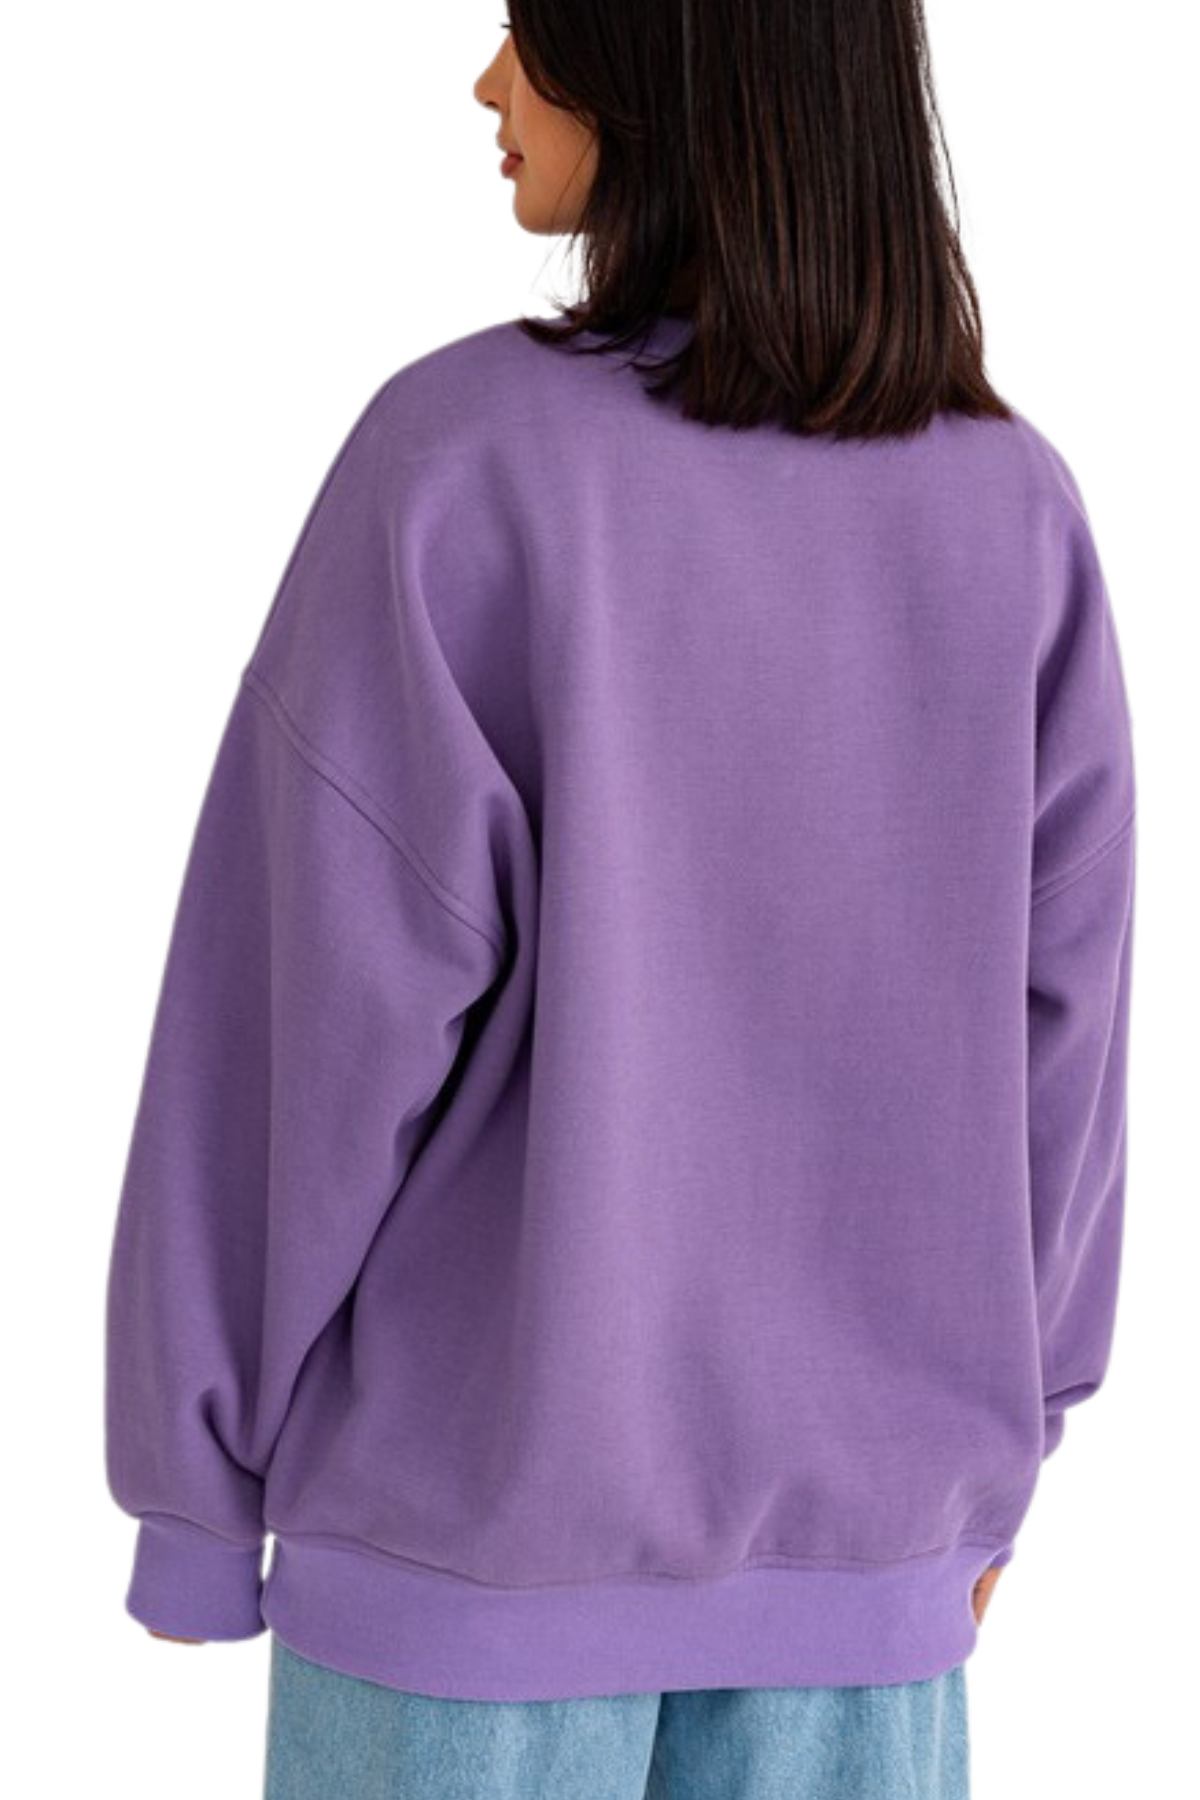 Santa Monica Fleece Lined Sweater - Purple